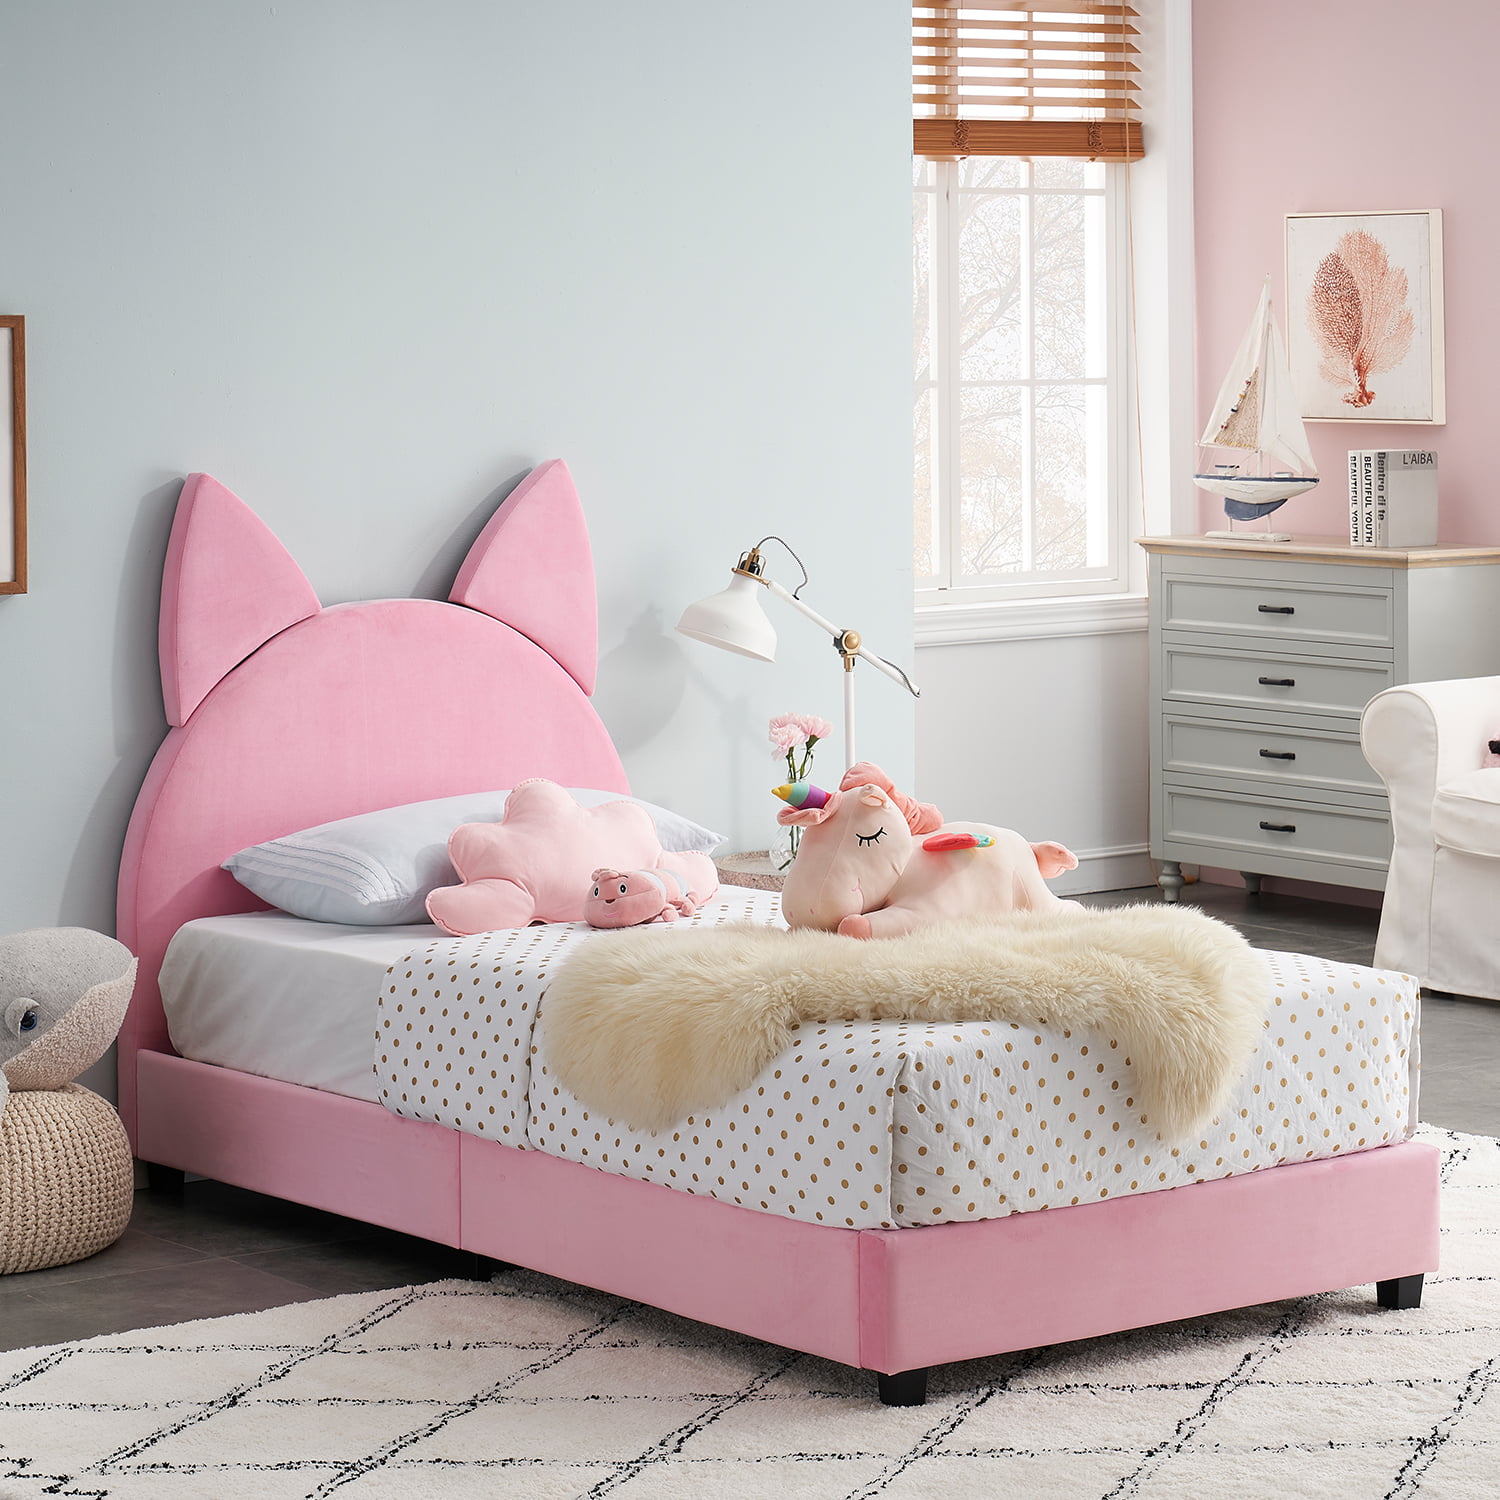 VECELO Kids Children Upholstered Bed Frame, Cat Shape, Twin Size